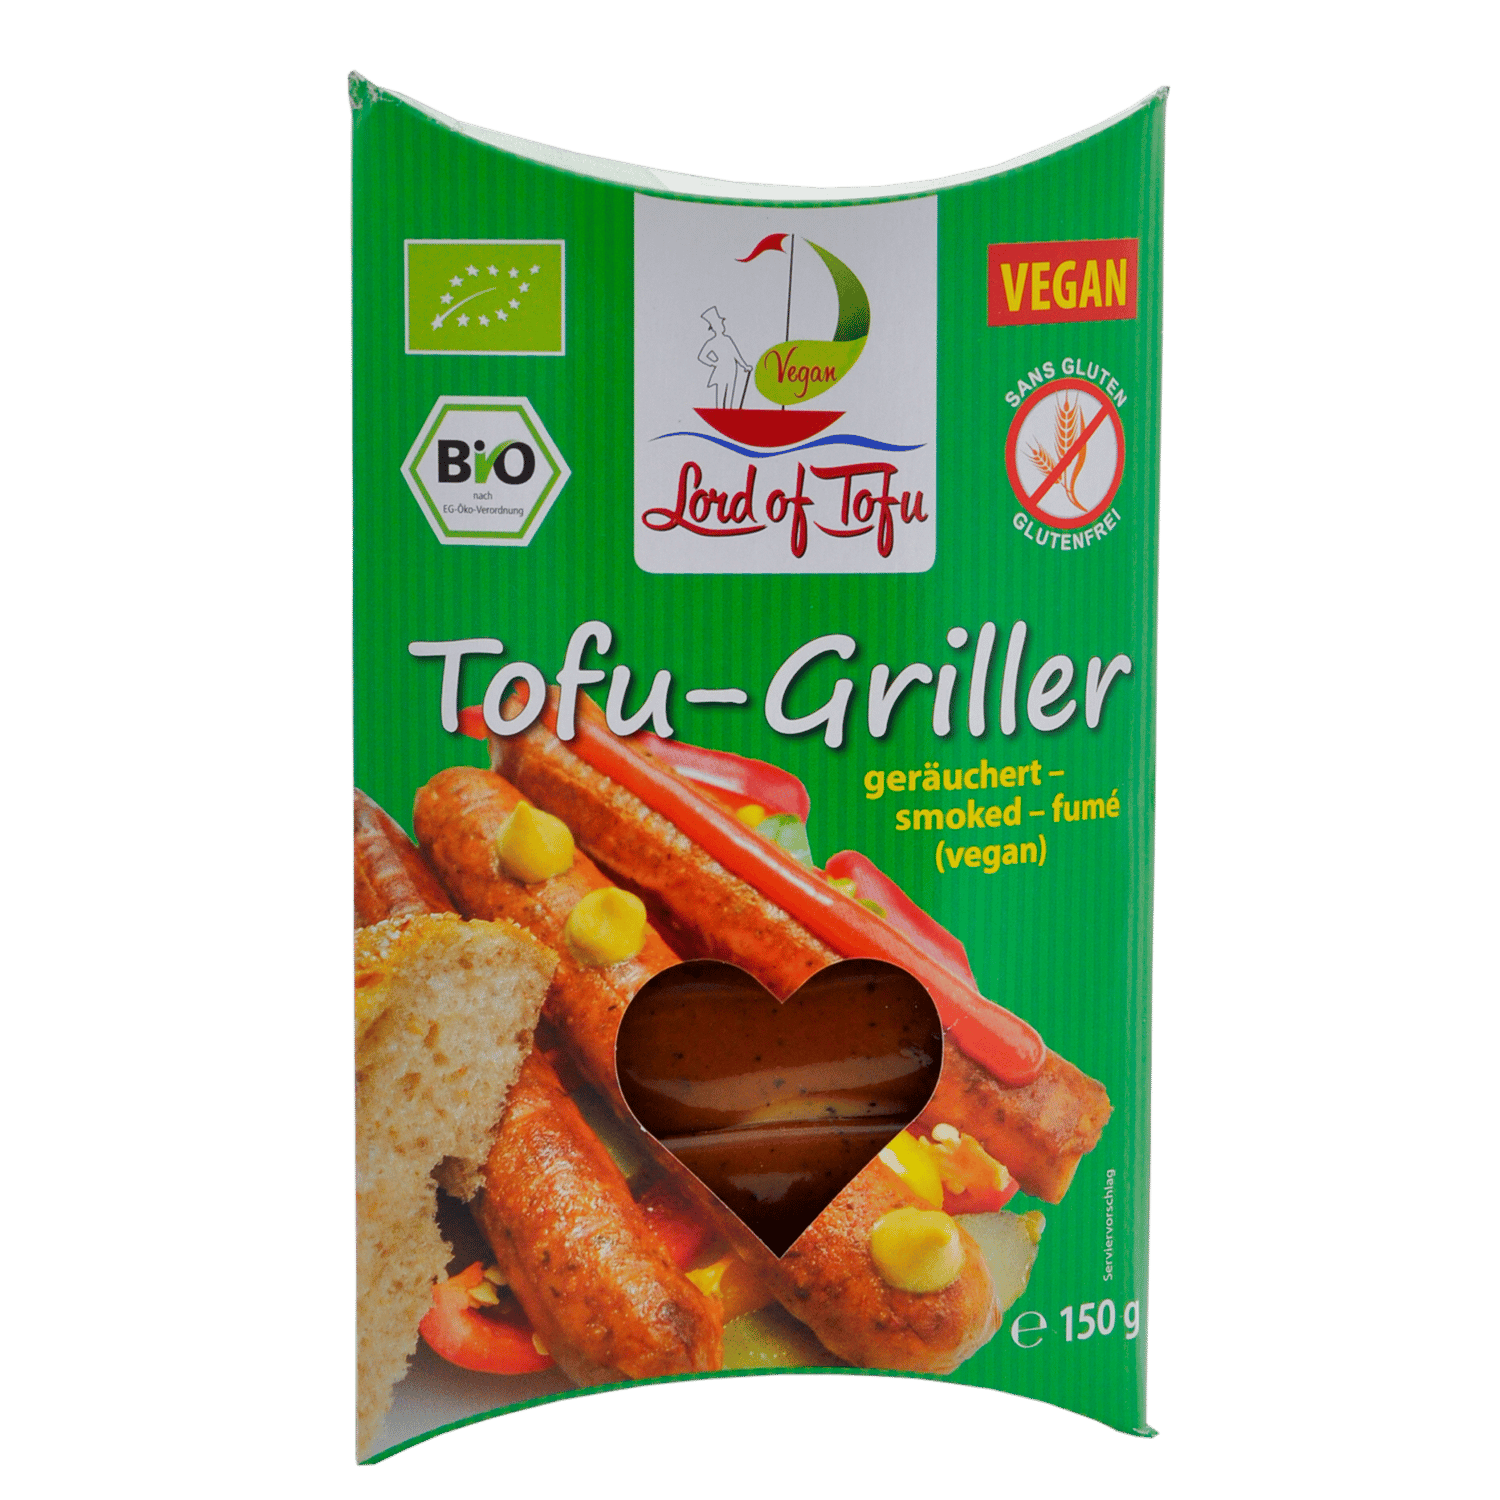 Tofu-Griller, Organic, 200g